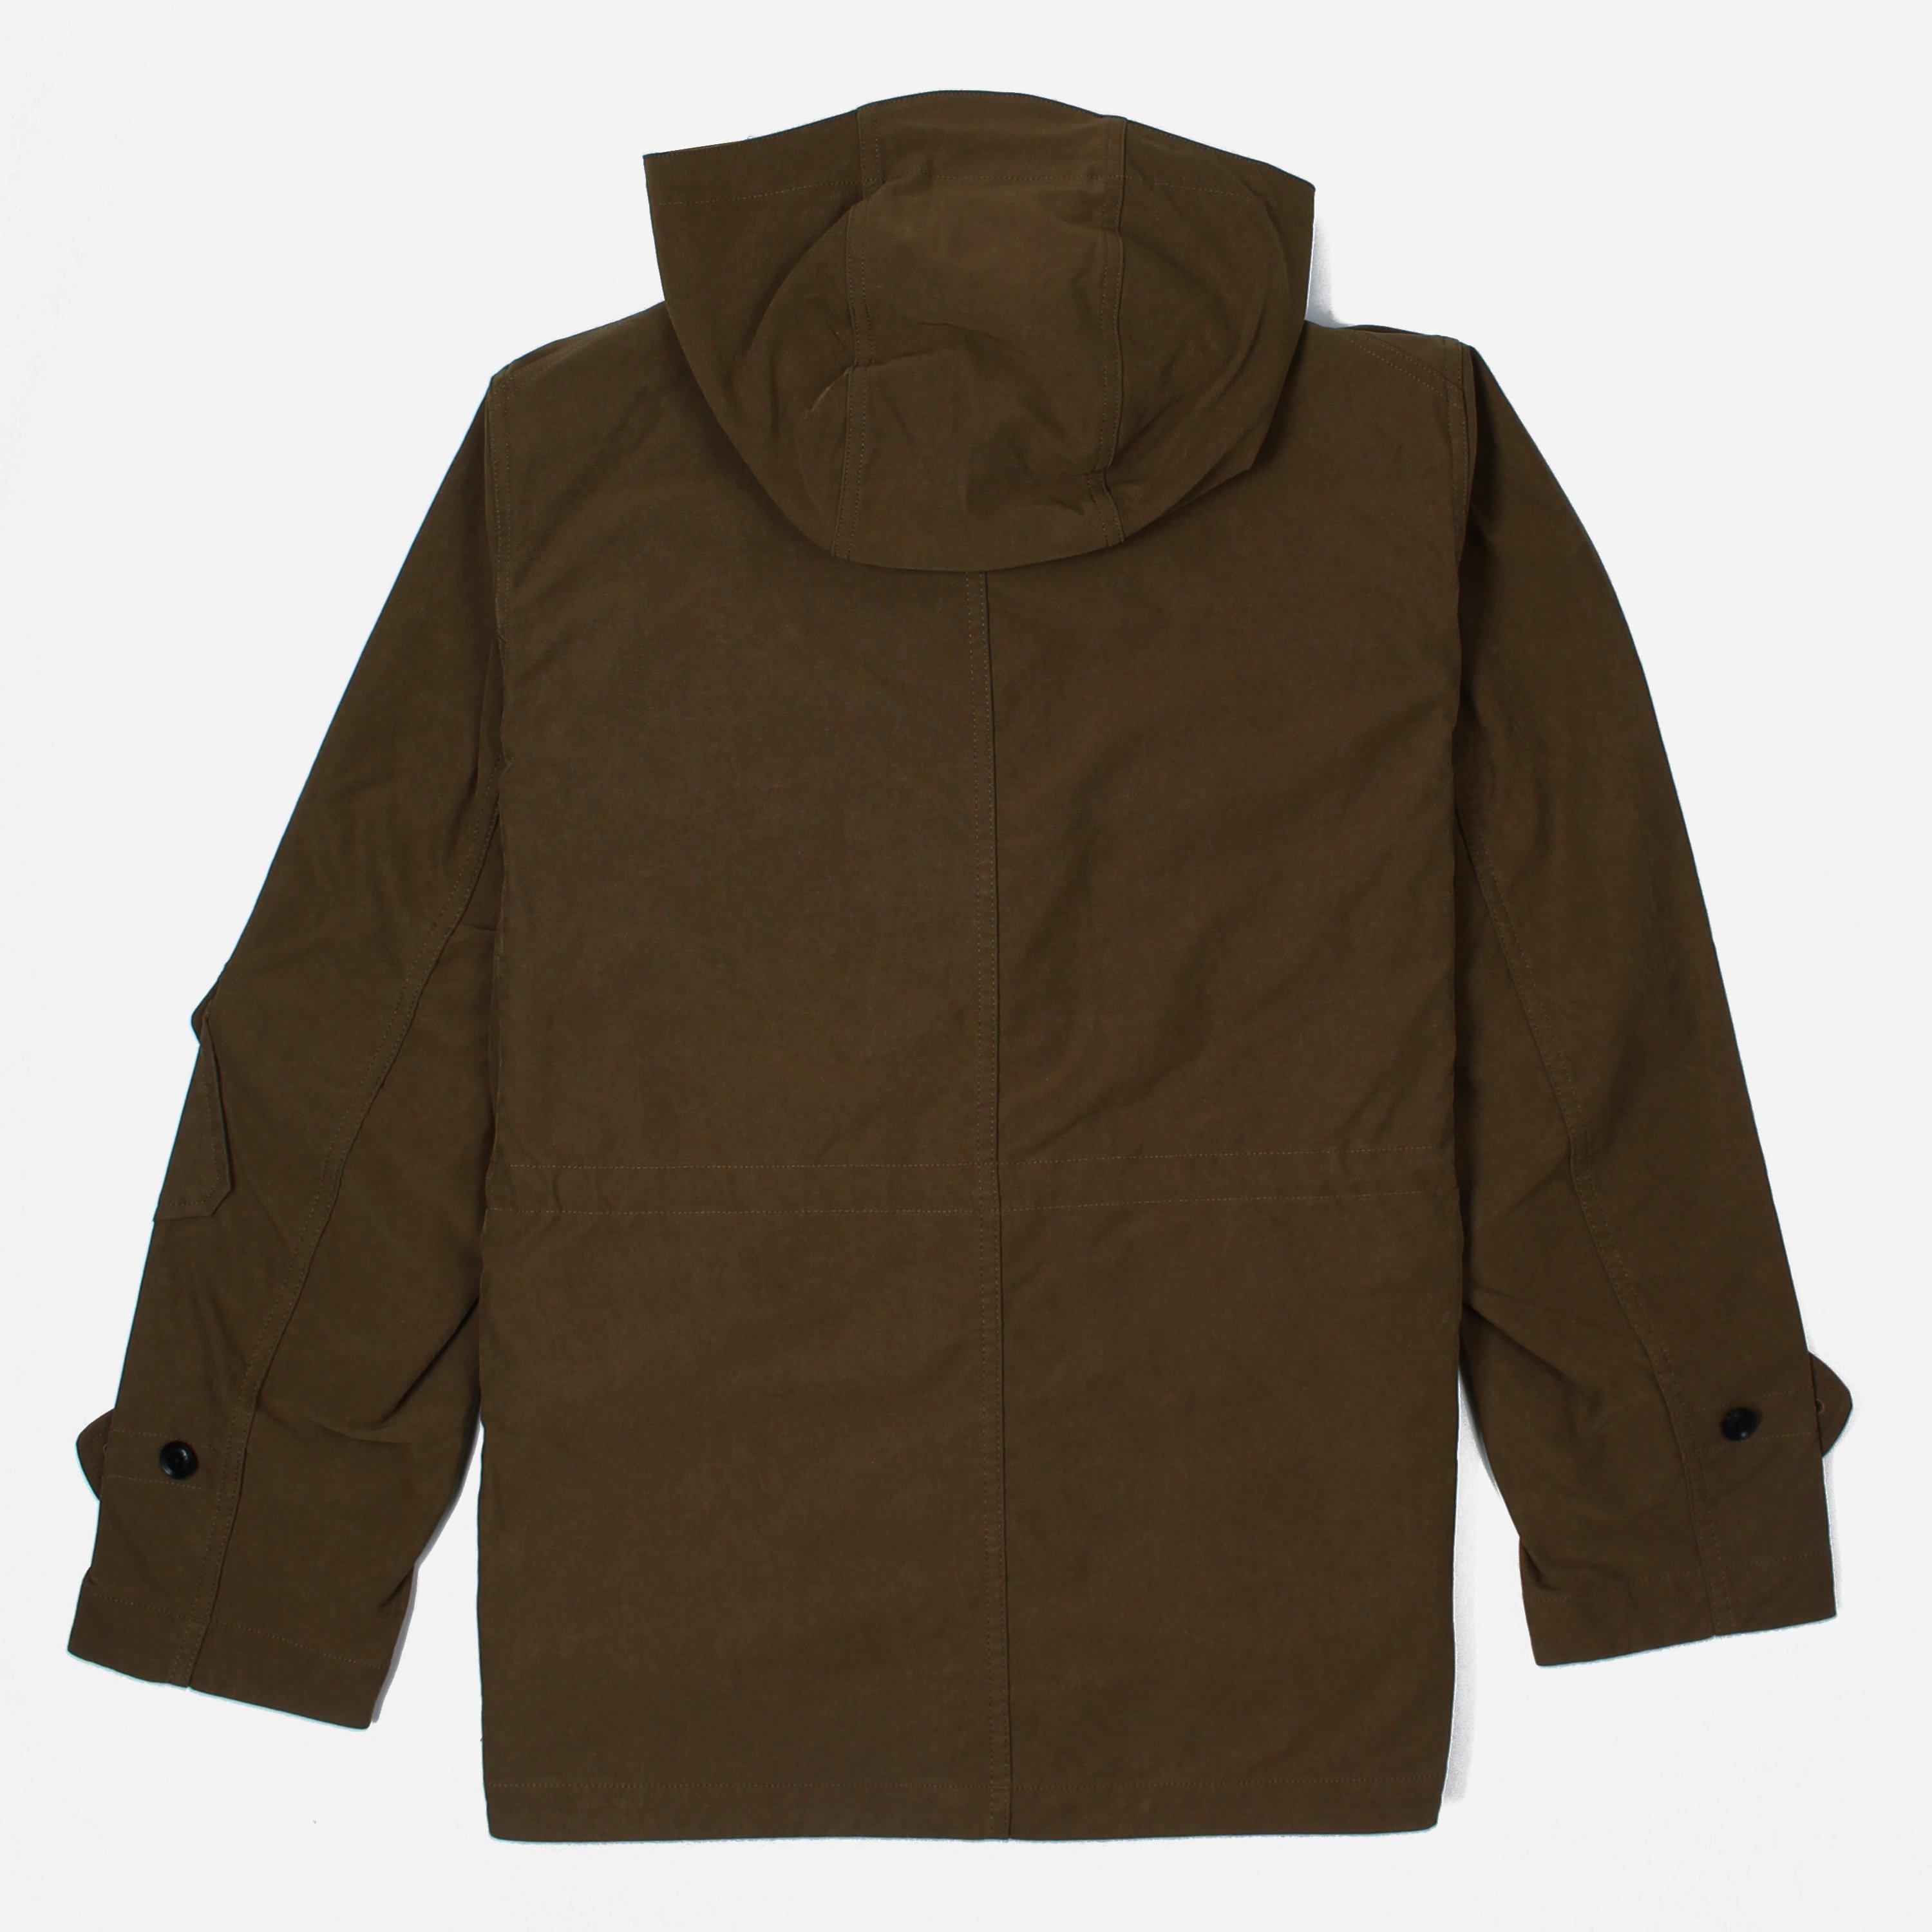 Nanamica Cruiser Jacket in Brown for Men - Lyst